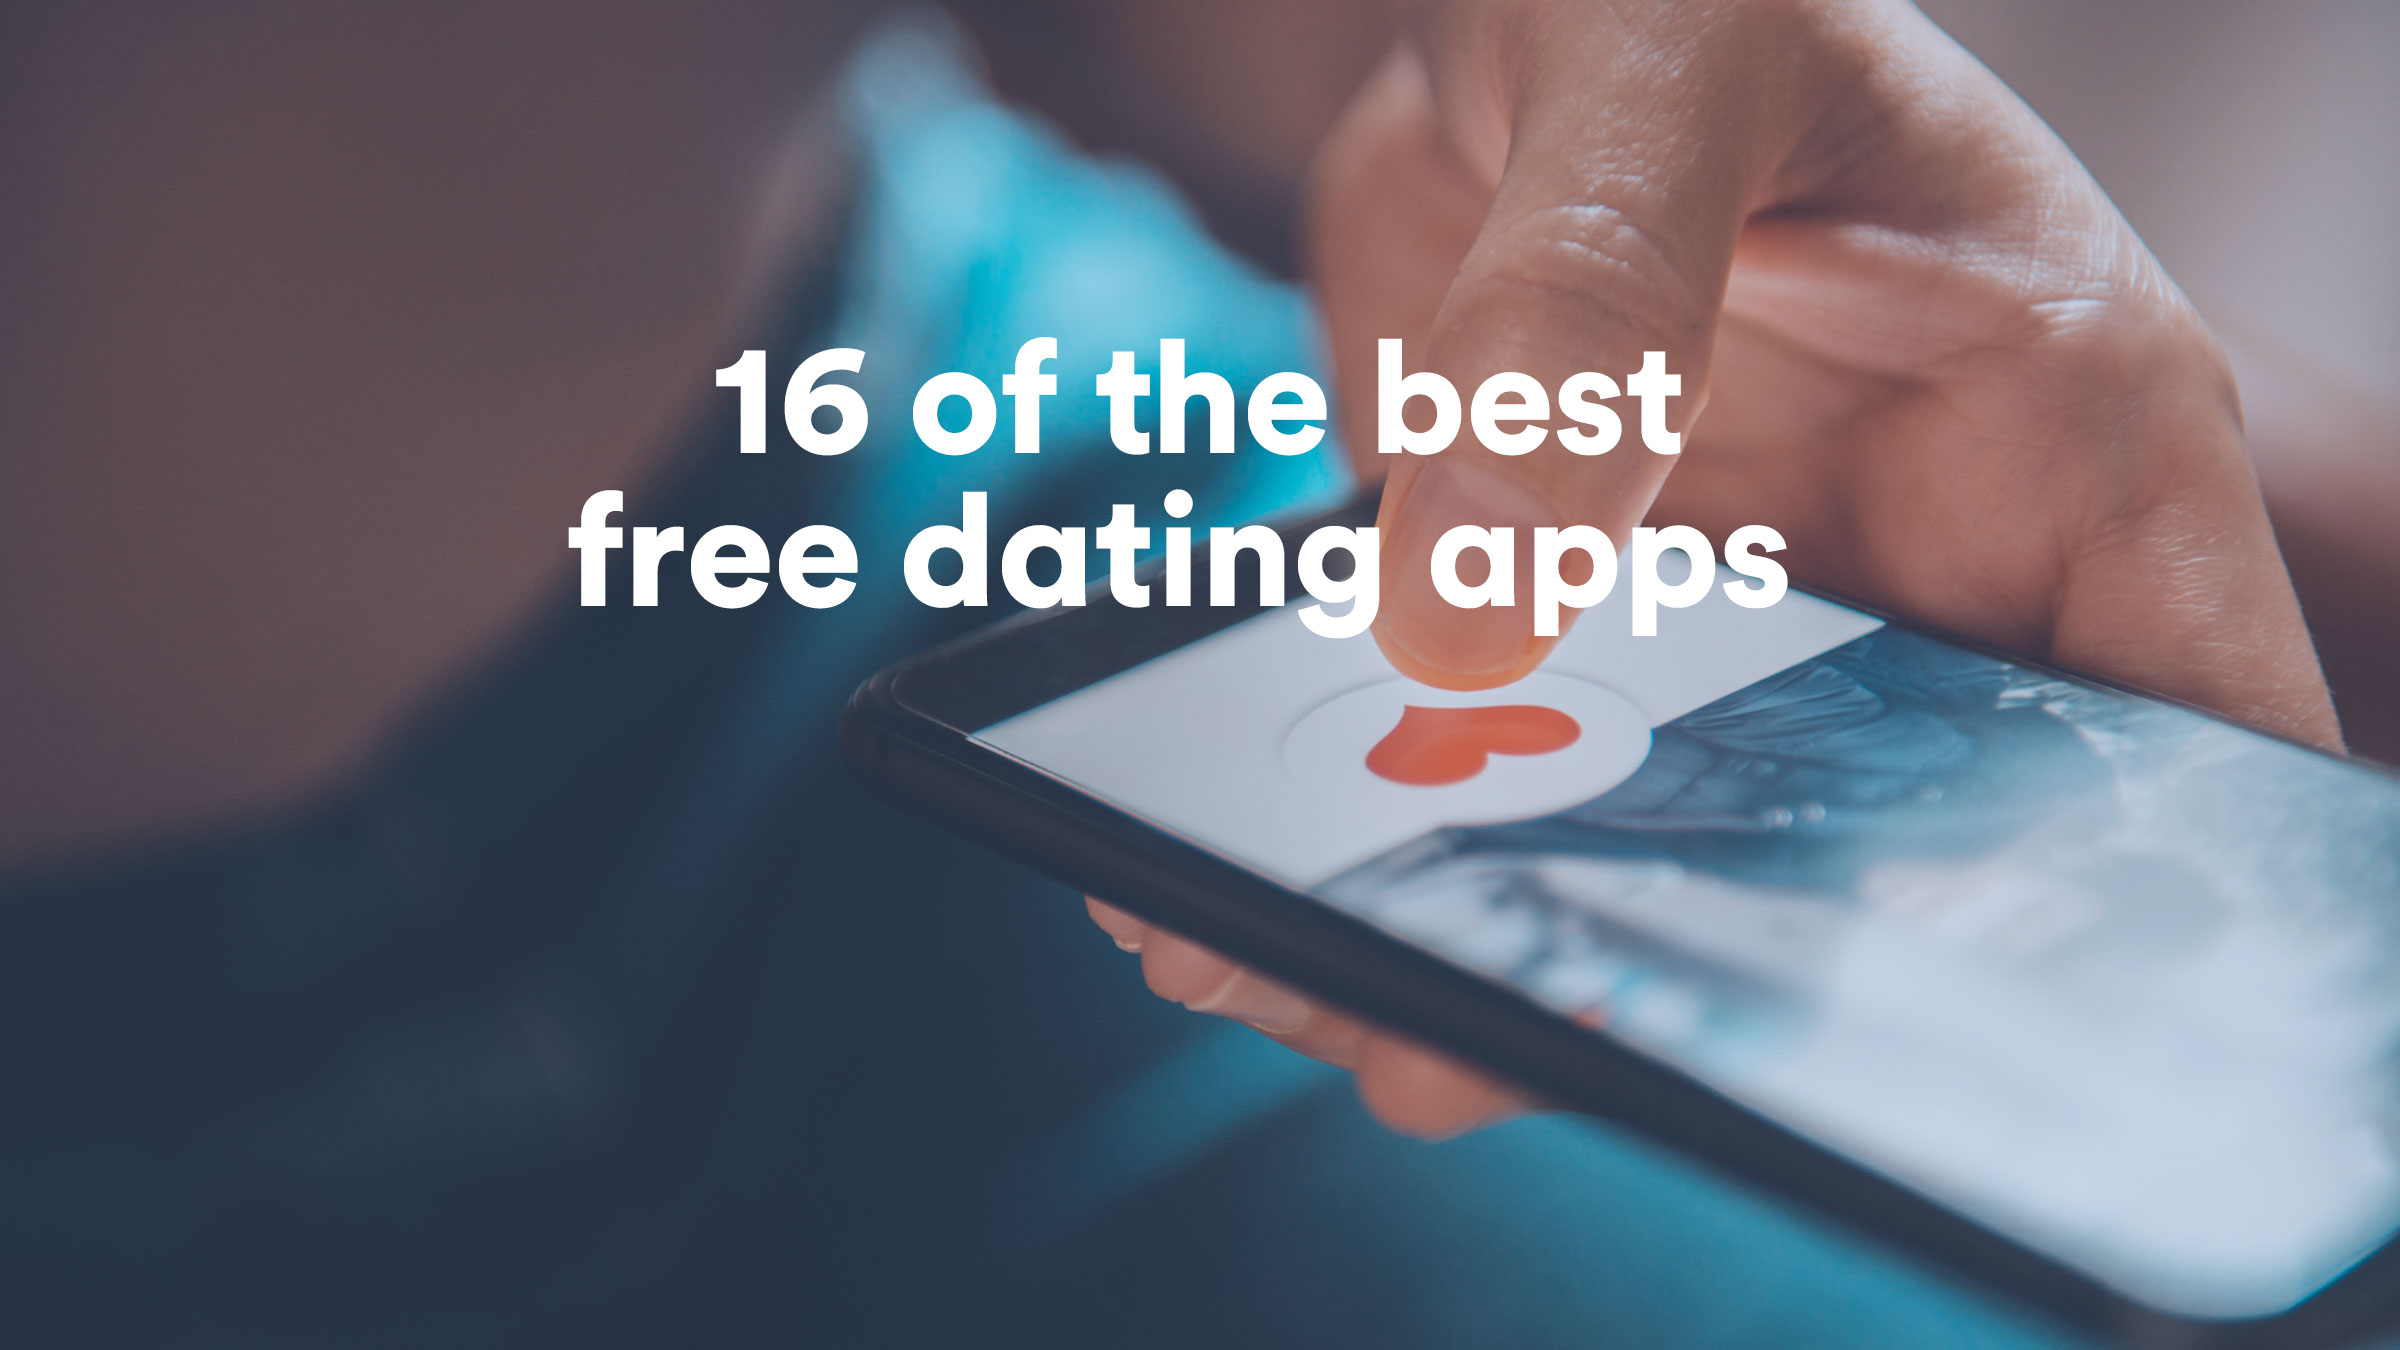 dating apps free 2019 reddit